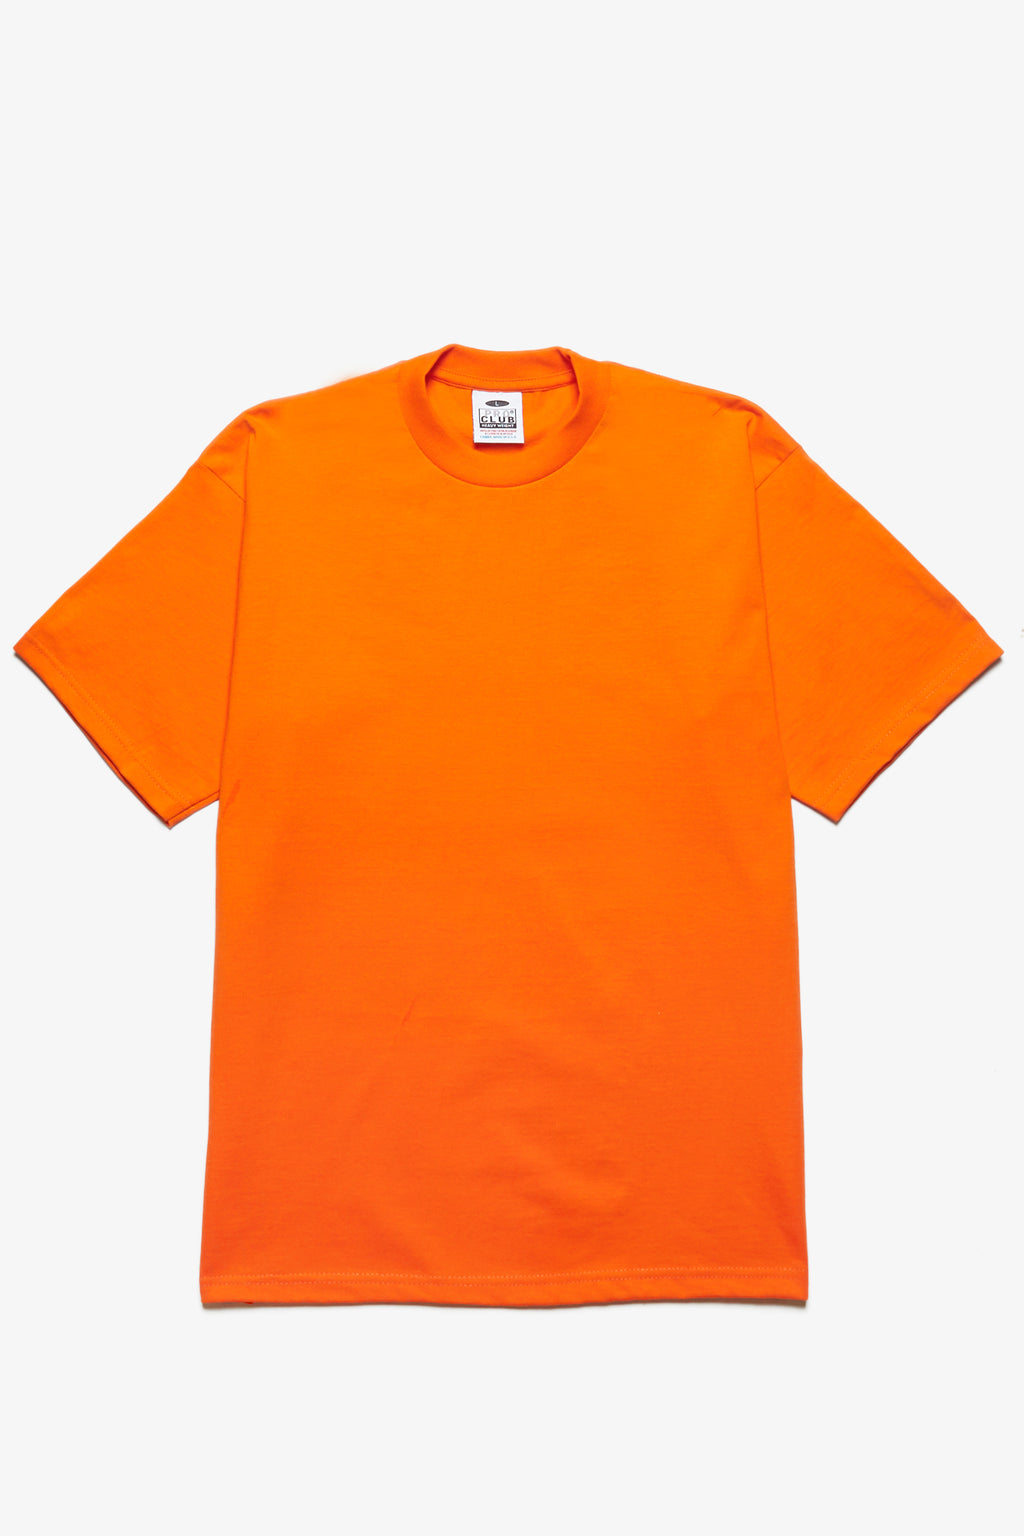 Pro Club - Heavyweight T-Shirt - Orange